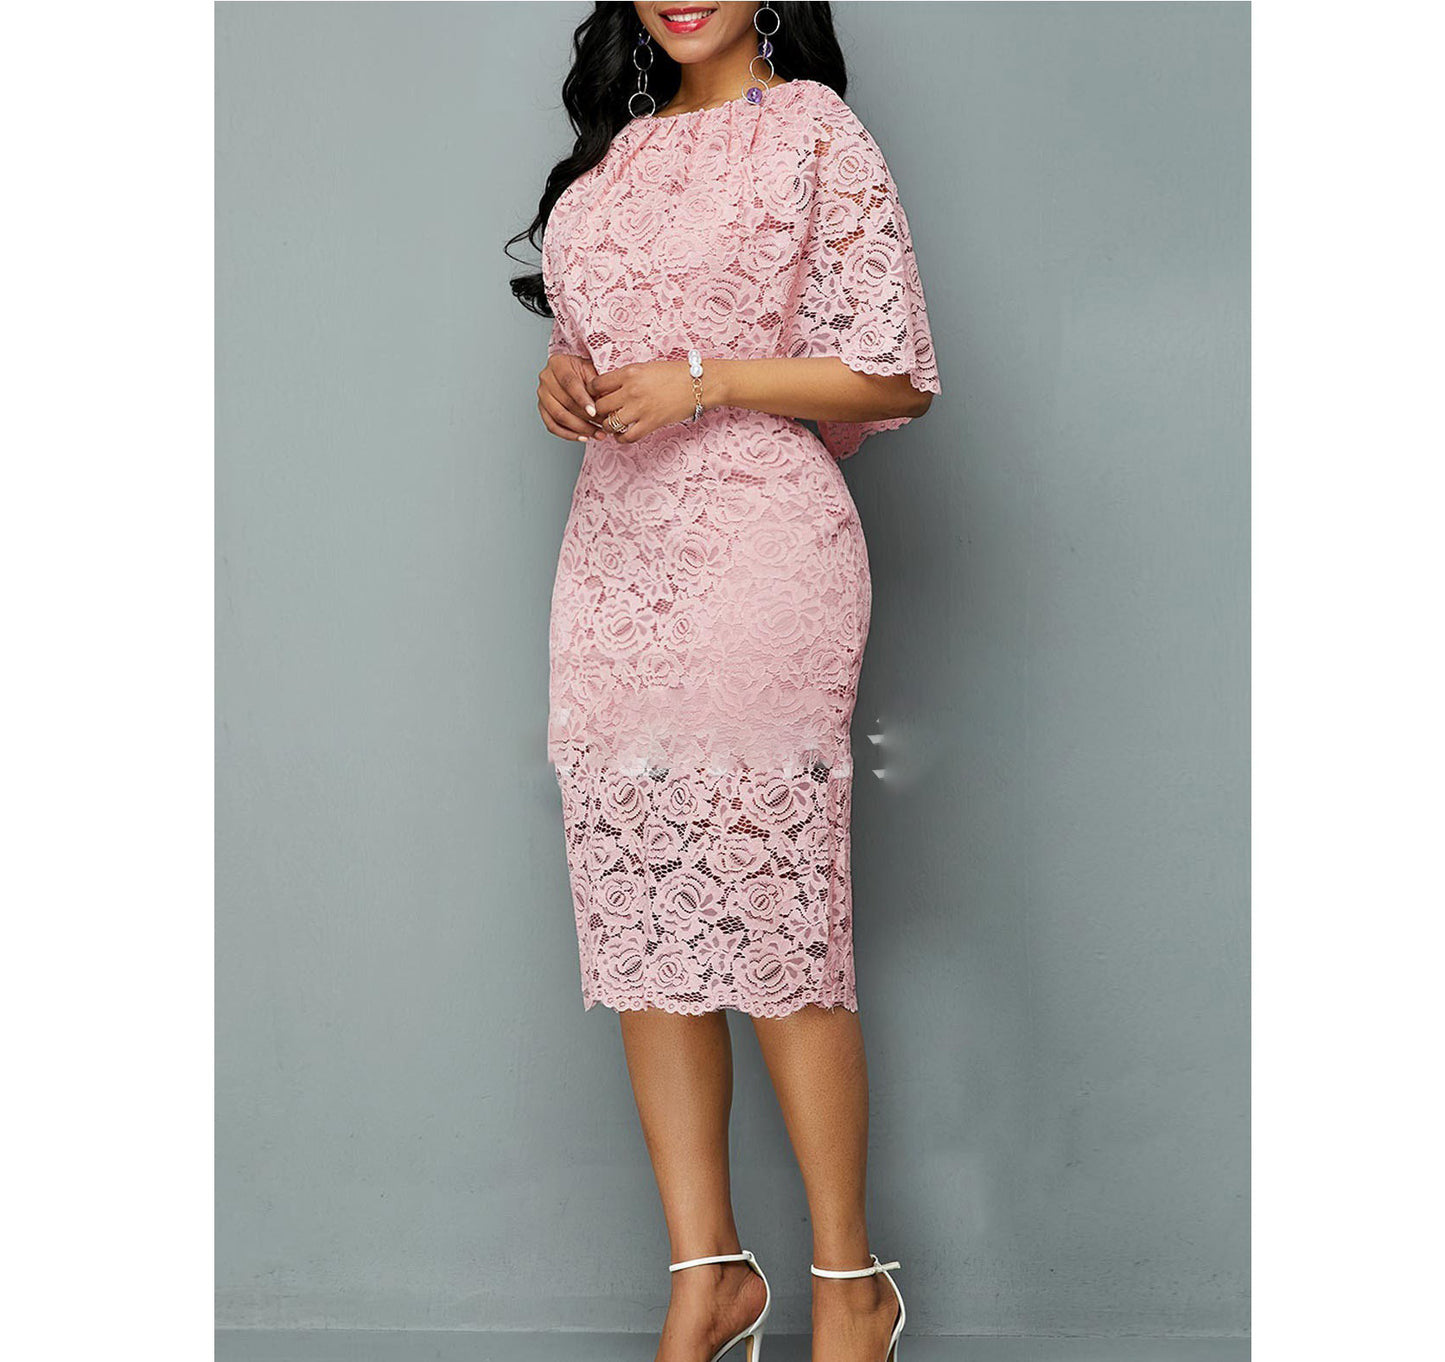 Pink Lace Dress For Women Fashion Wedding Sizes S to 5XL Plus Size